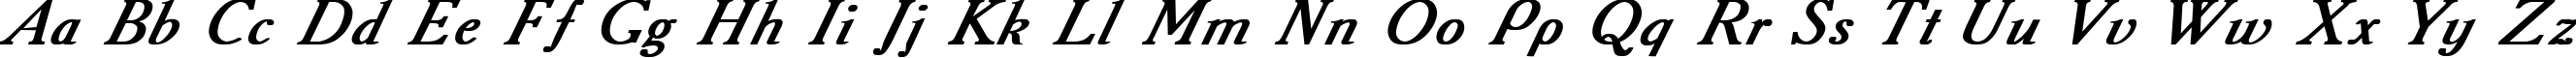 Пример написания английского алфавита шрифтом Academy Bold Italic